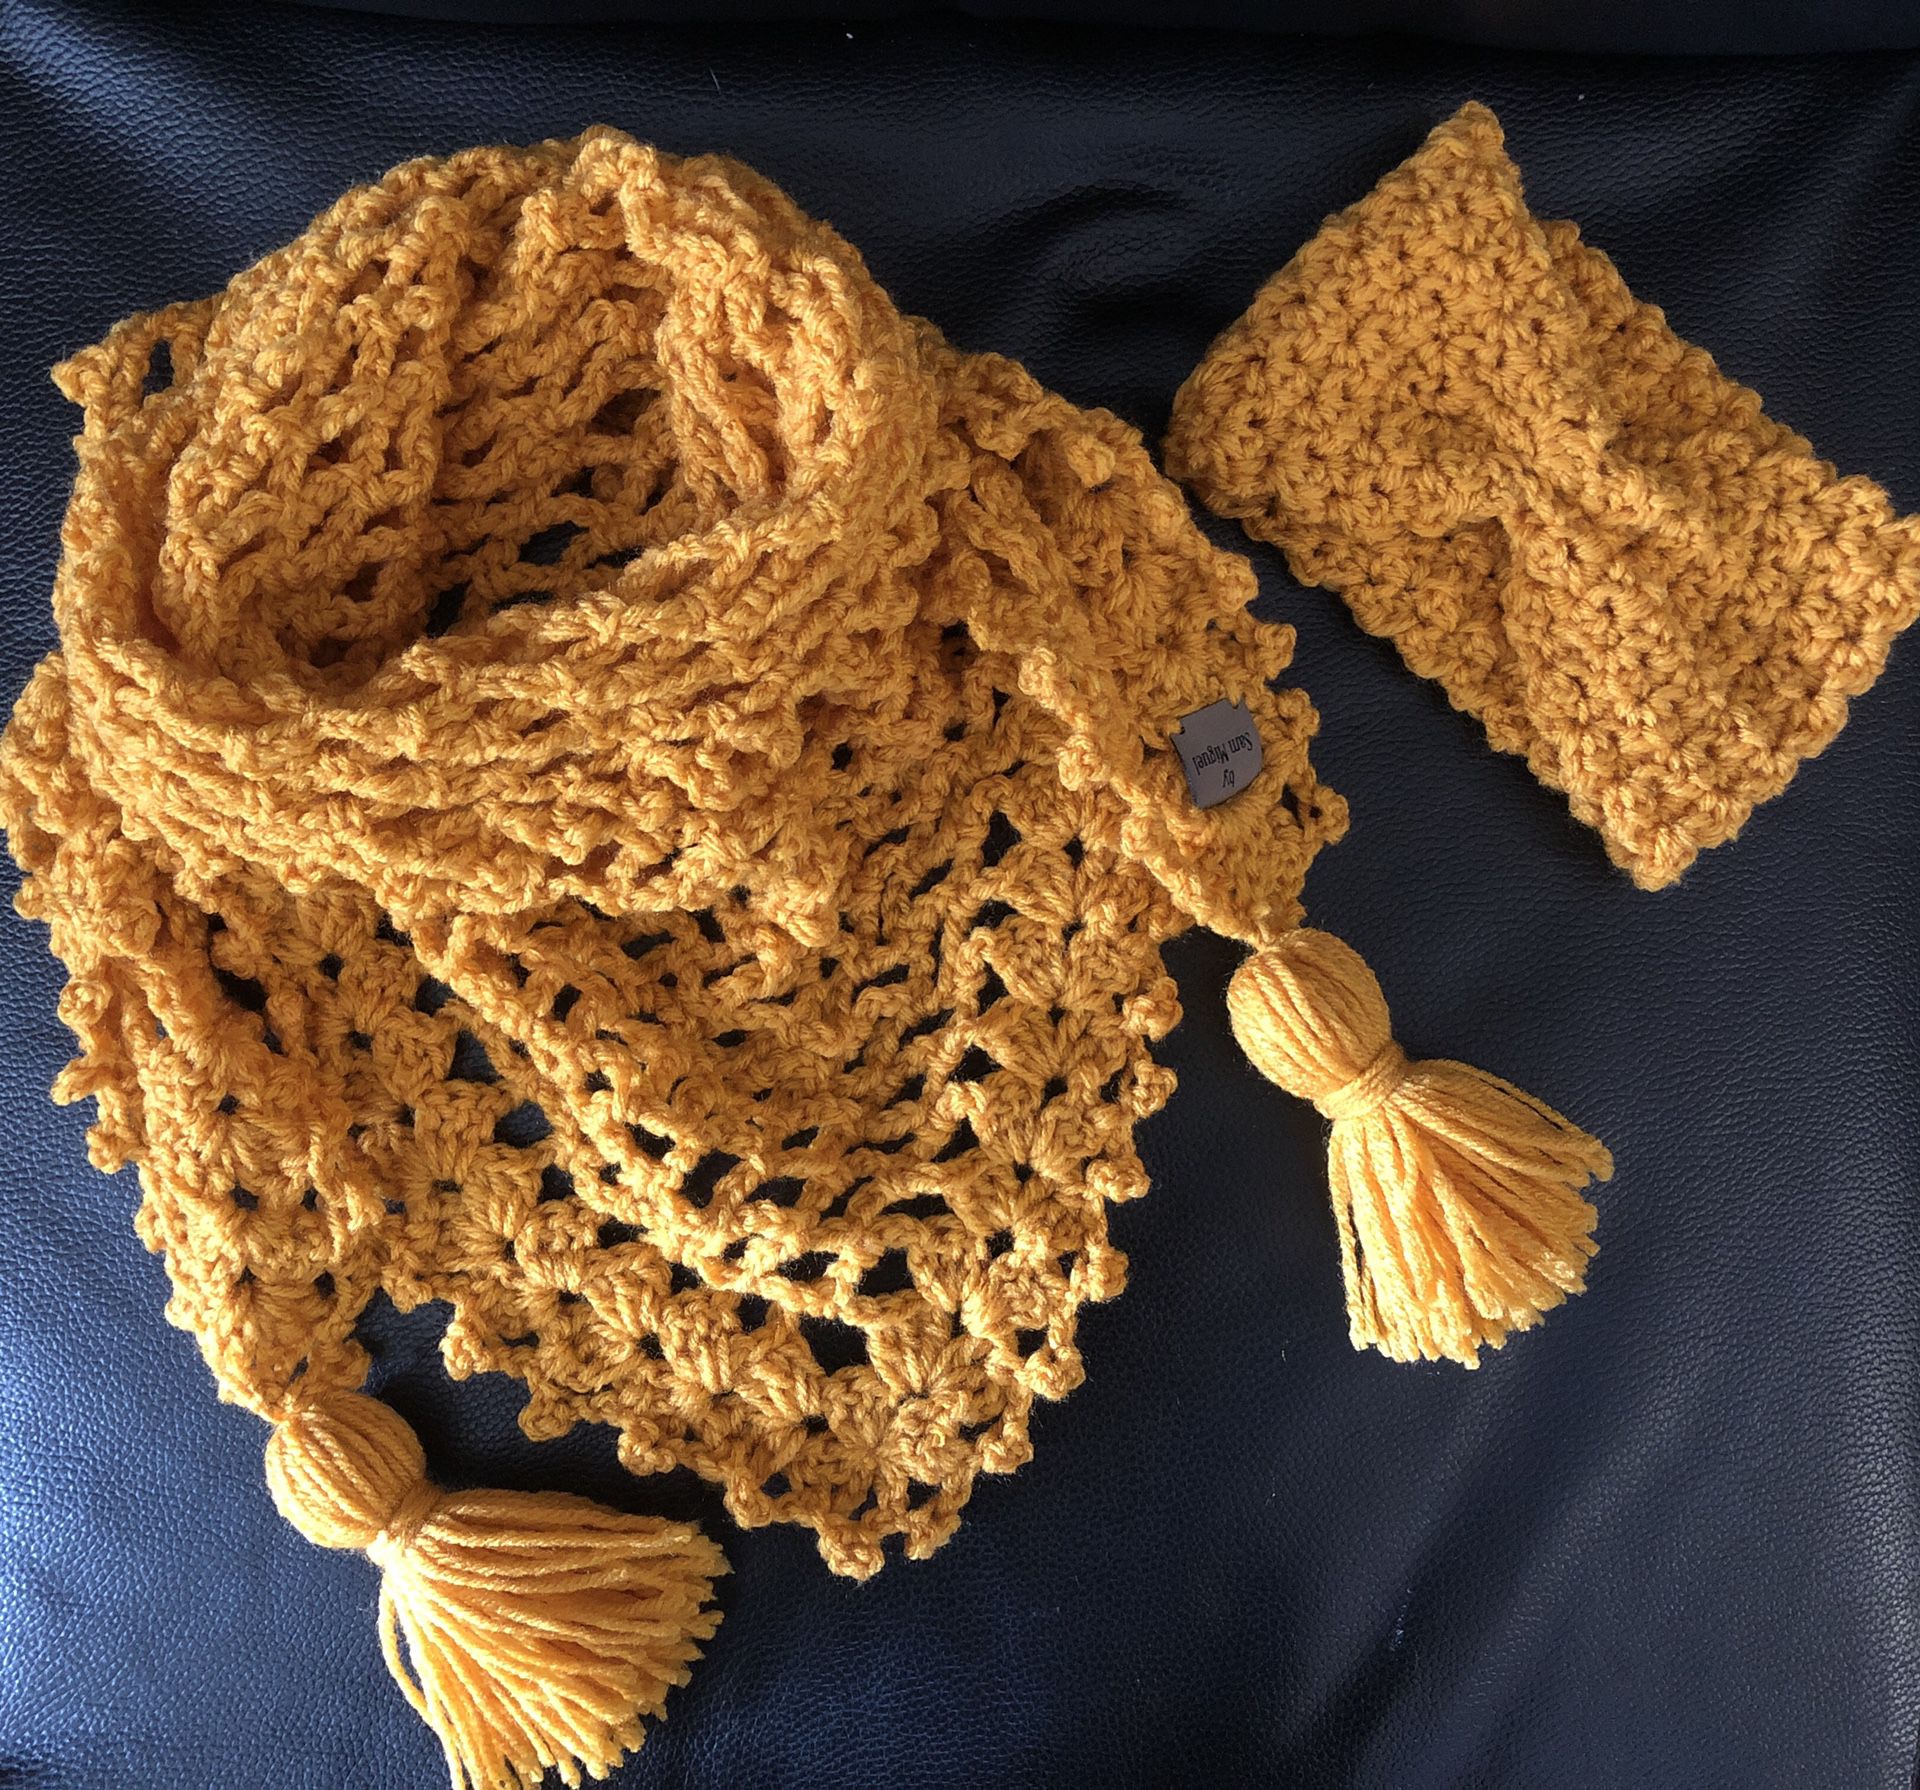 Handmade shawl